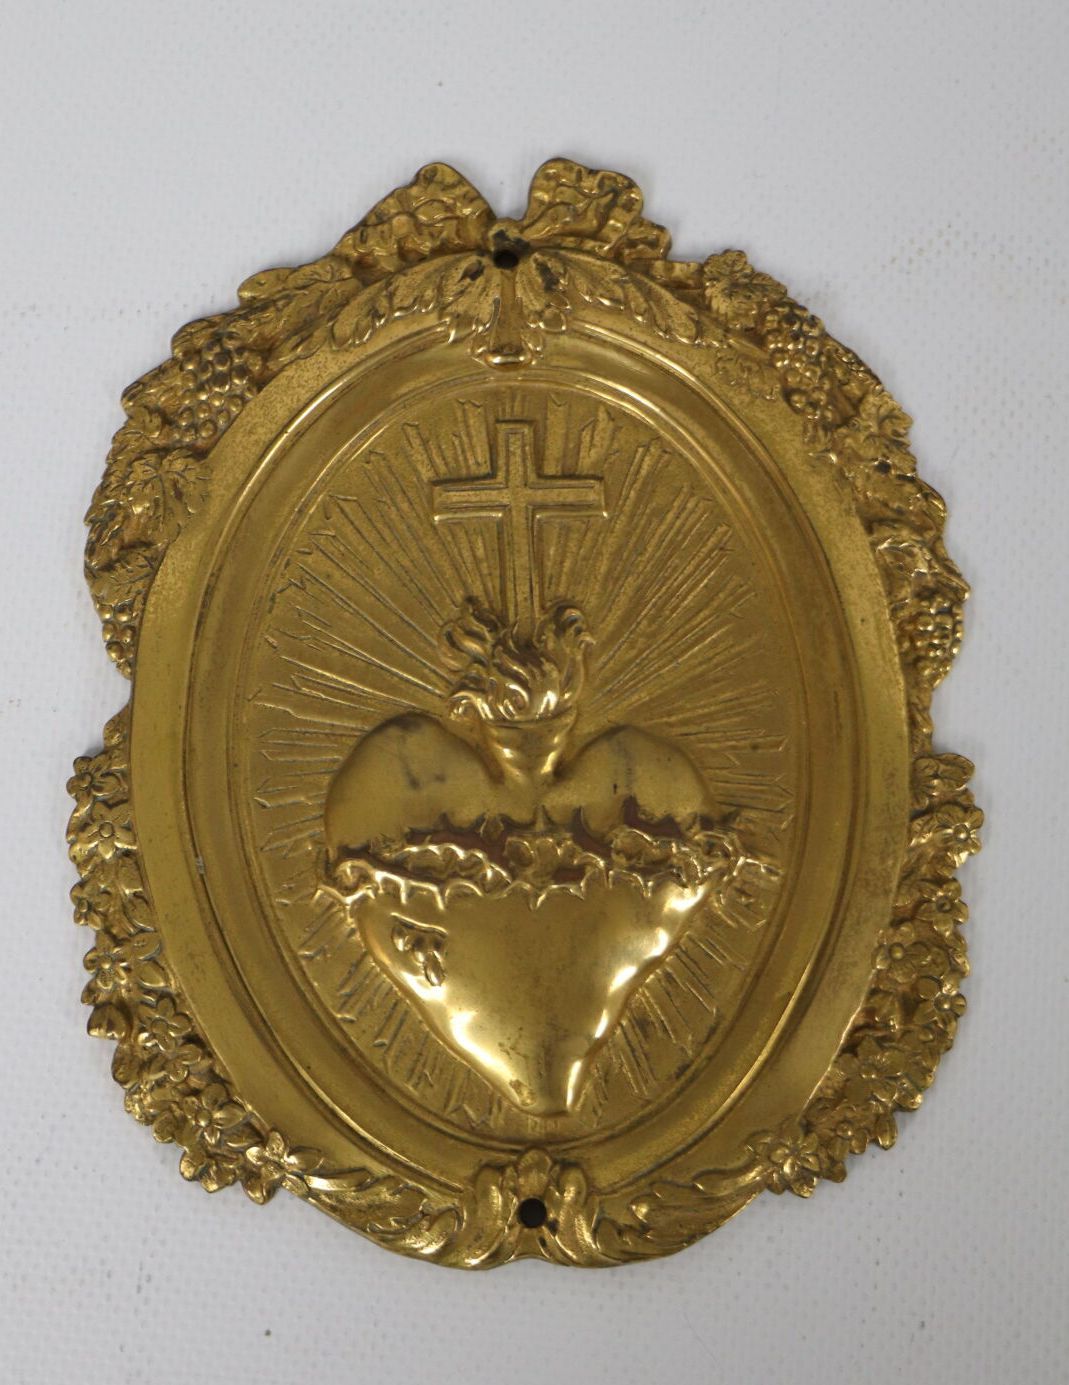 Null 鎏金铜牌，上面有描绘五旬节的奖章。
周围是葡萄树枝和花朵。 
19世纪末或20世纪初。
高_18,5厘米，宽_15厘米